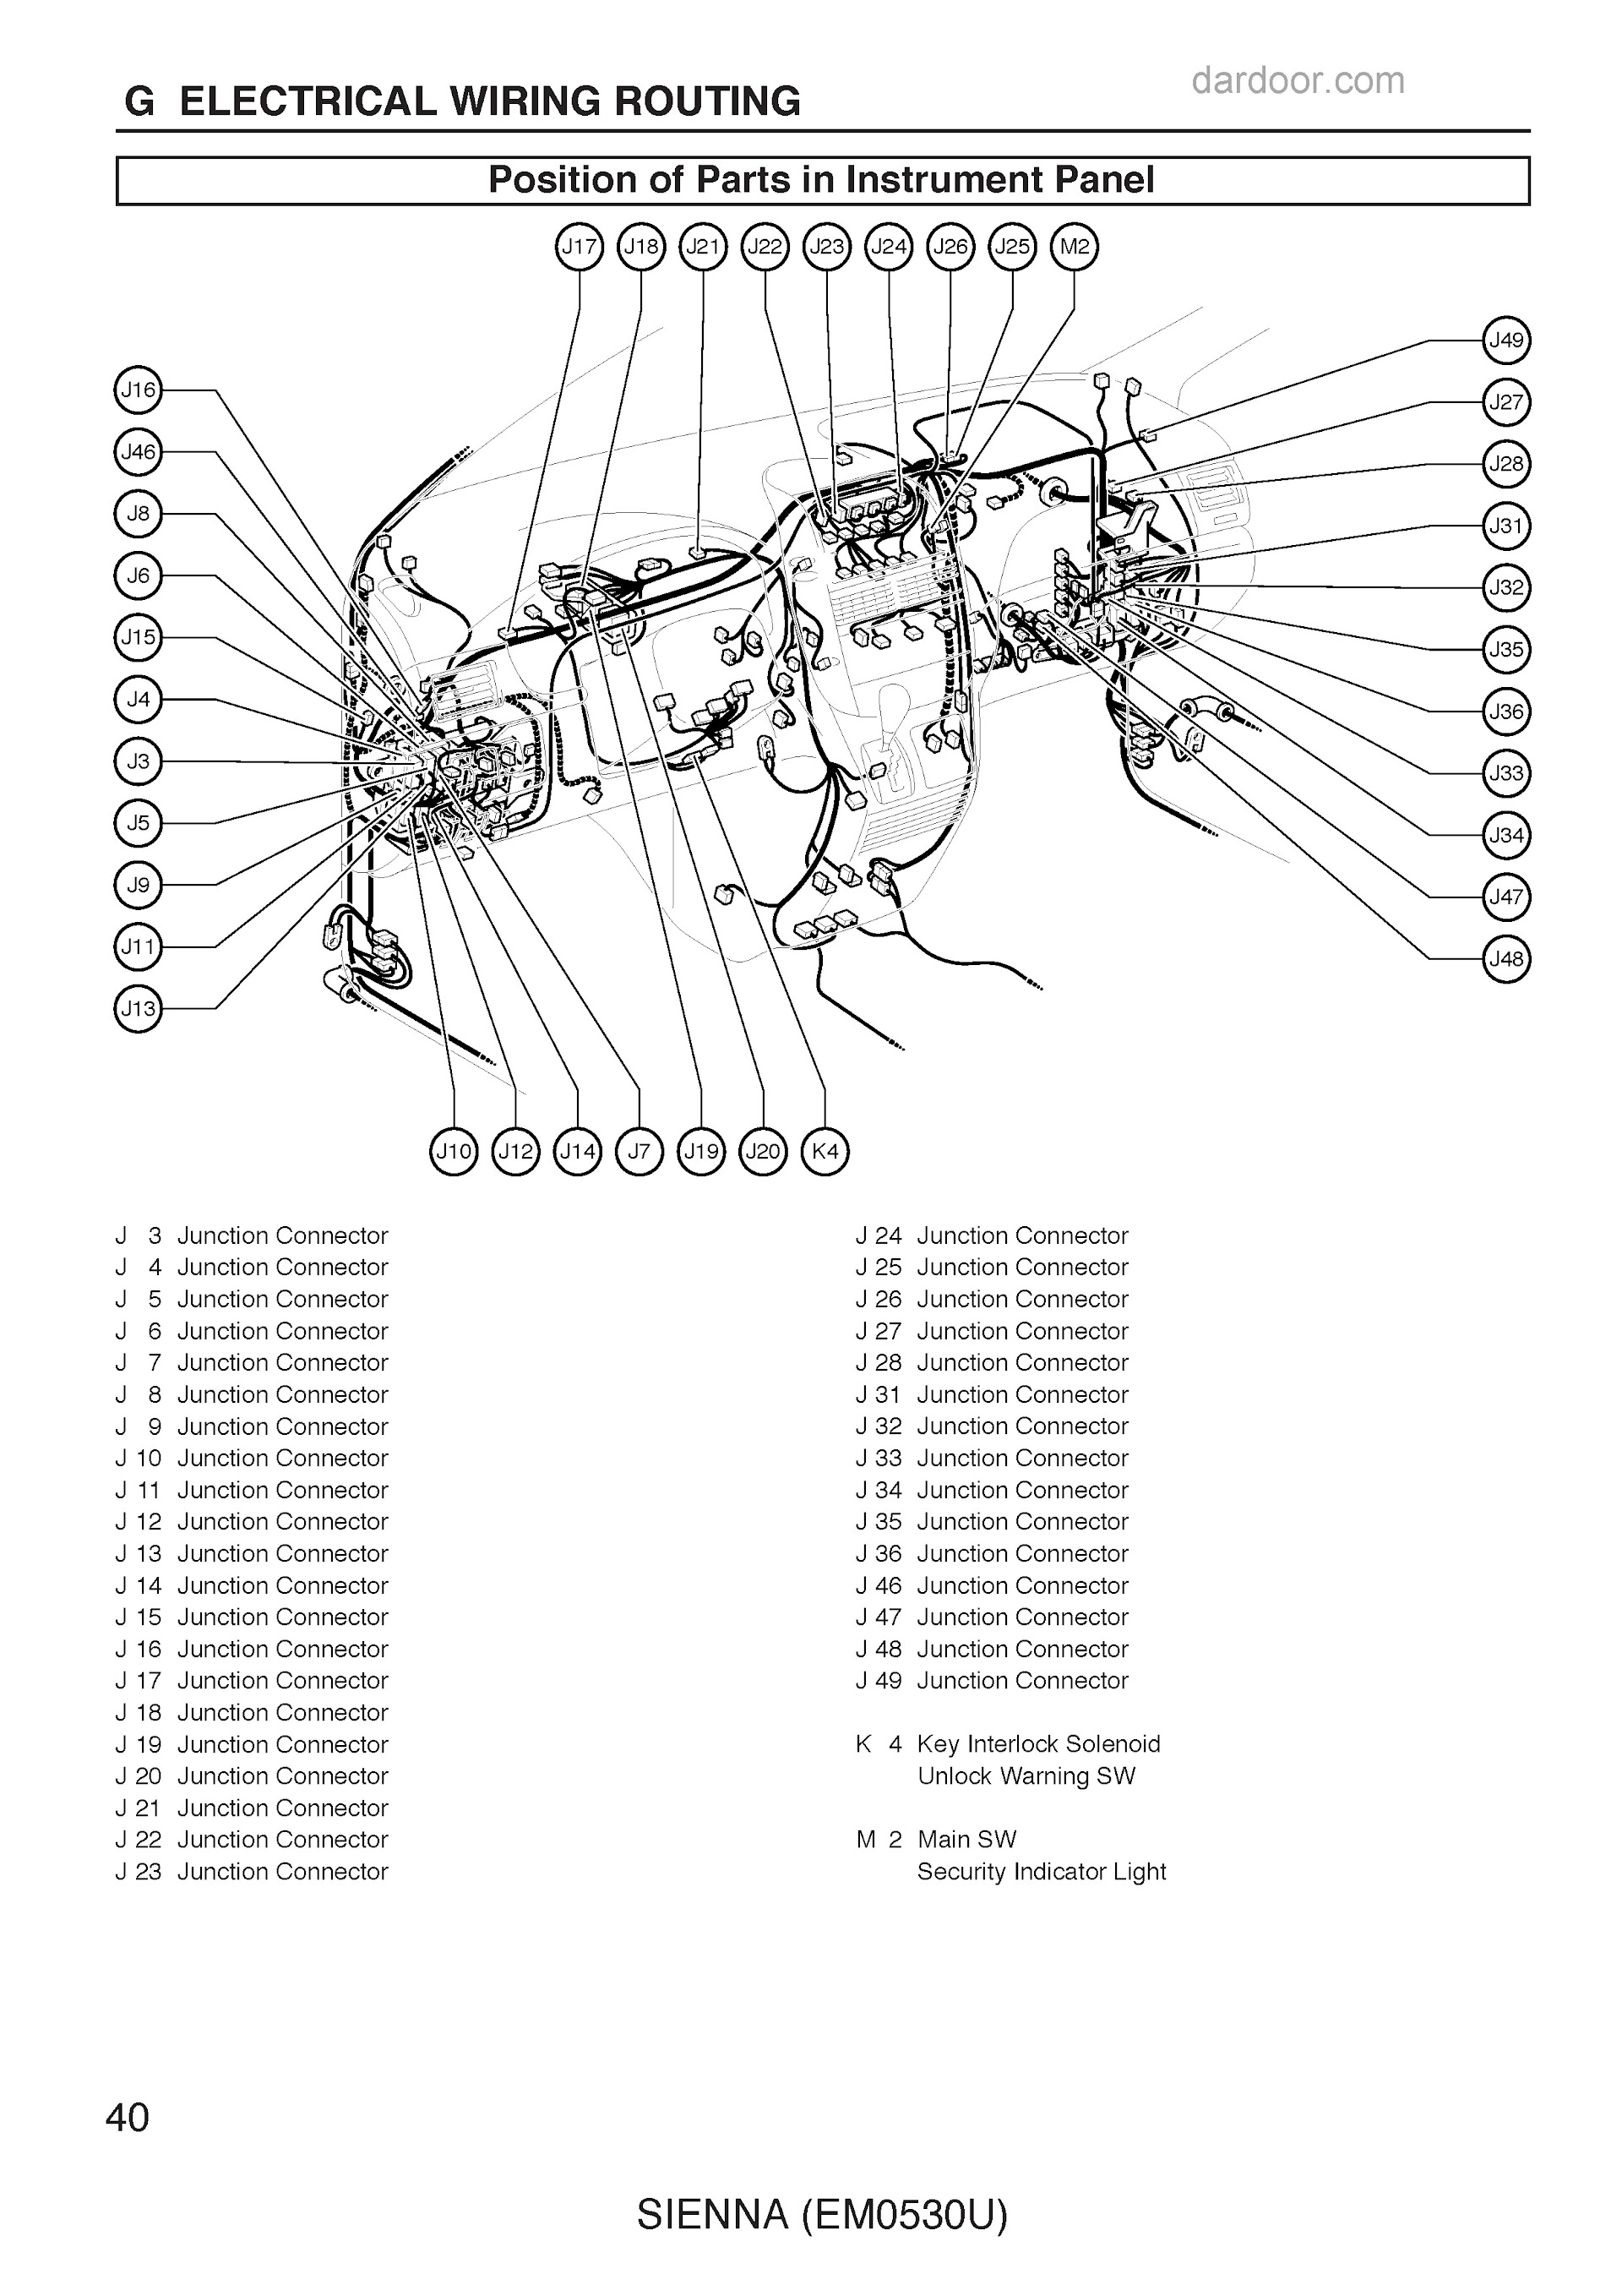 2007 Toyota Sienna Repair Manual, Electrical Wiring Routing